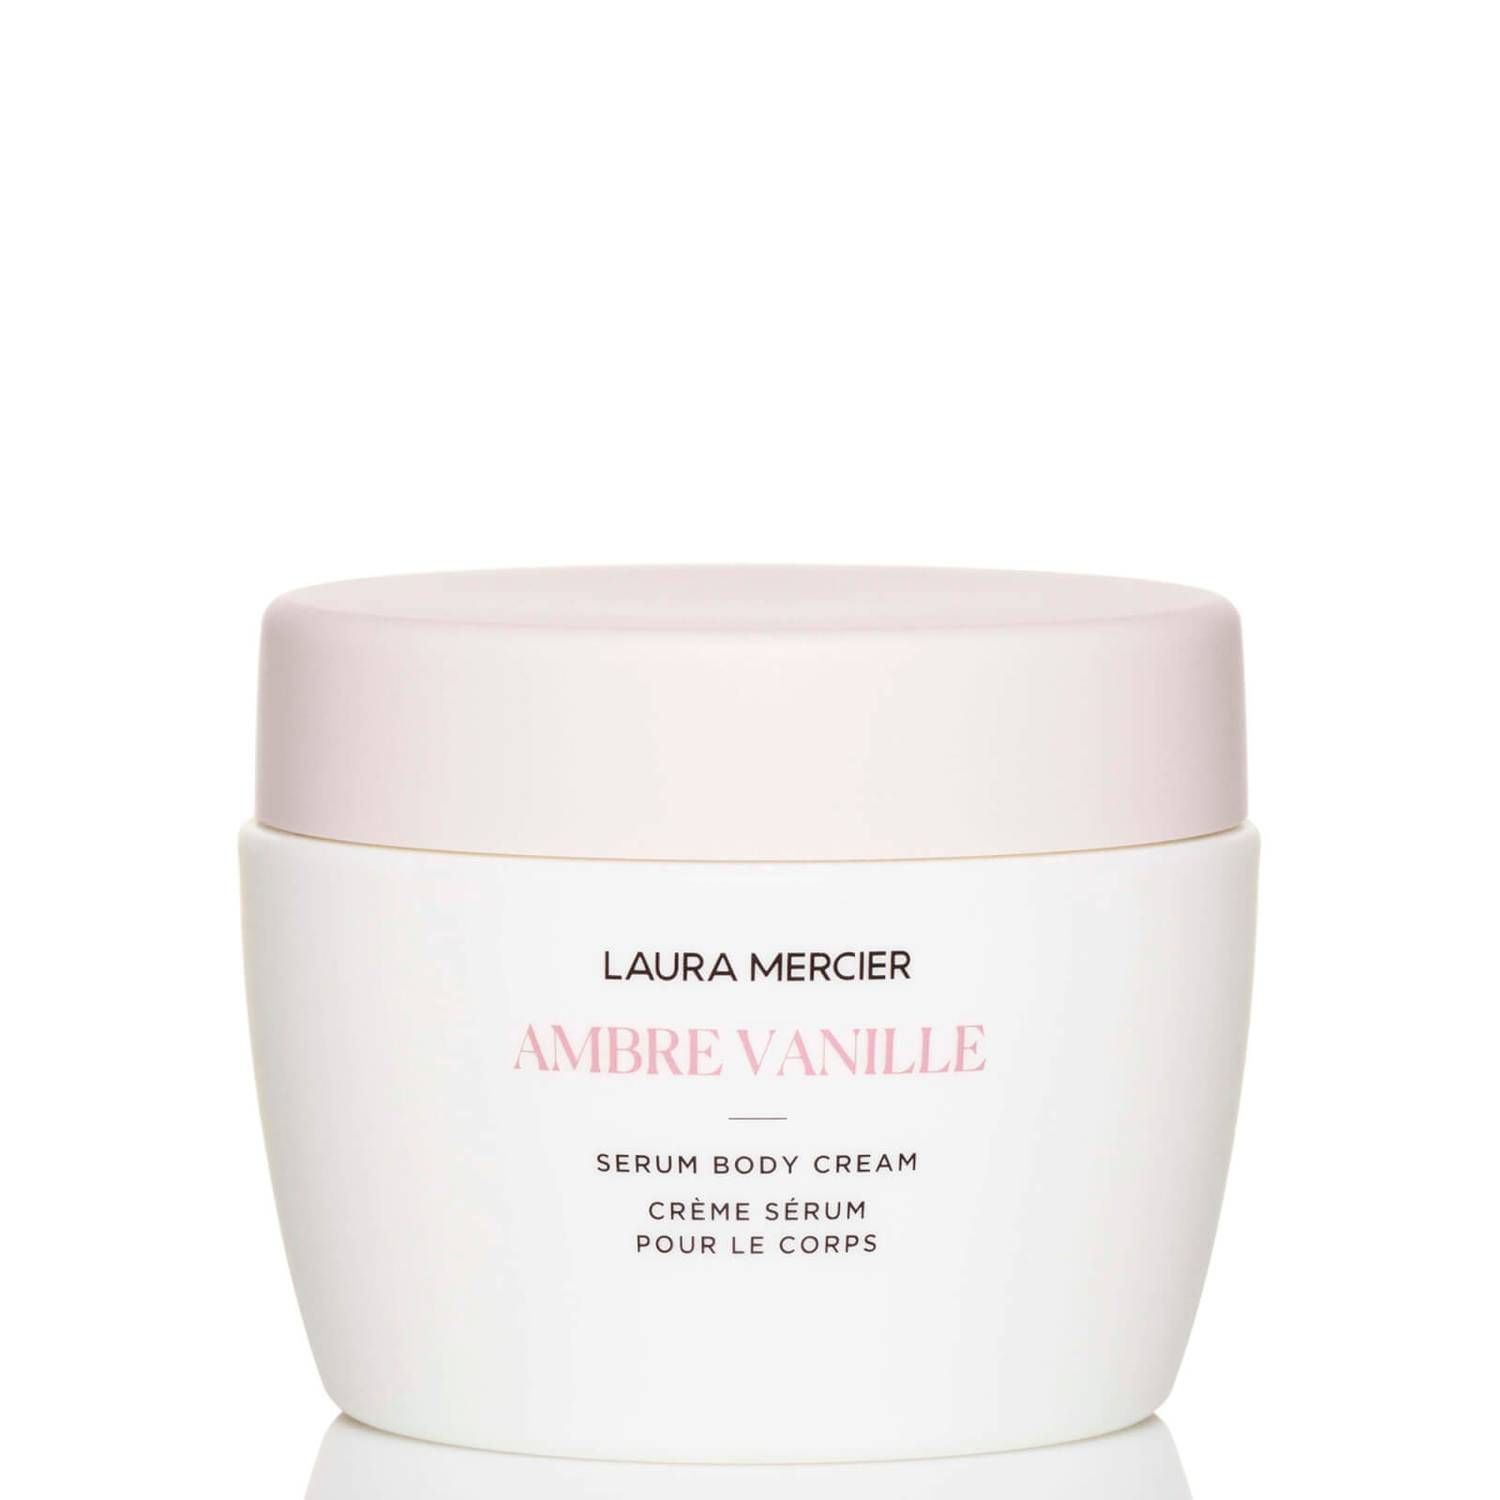 Laura Mercier Ambre Vanille Serum Body Cream 200ml | Cult Beauty